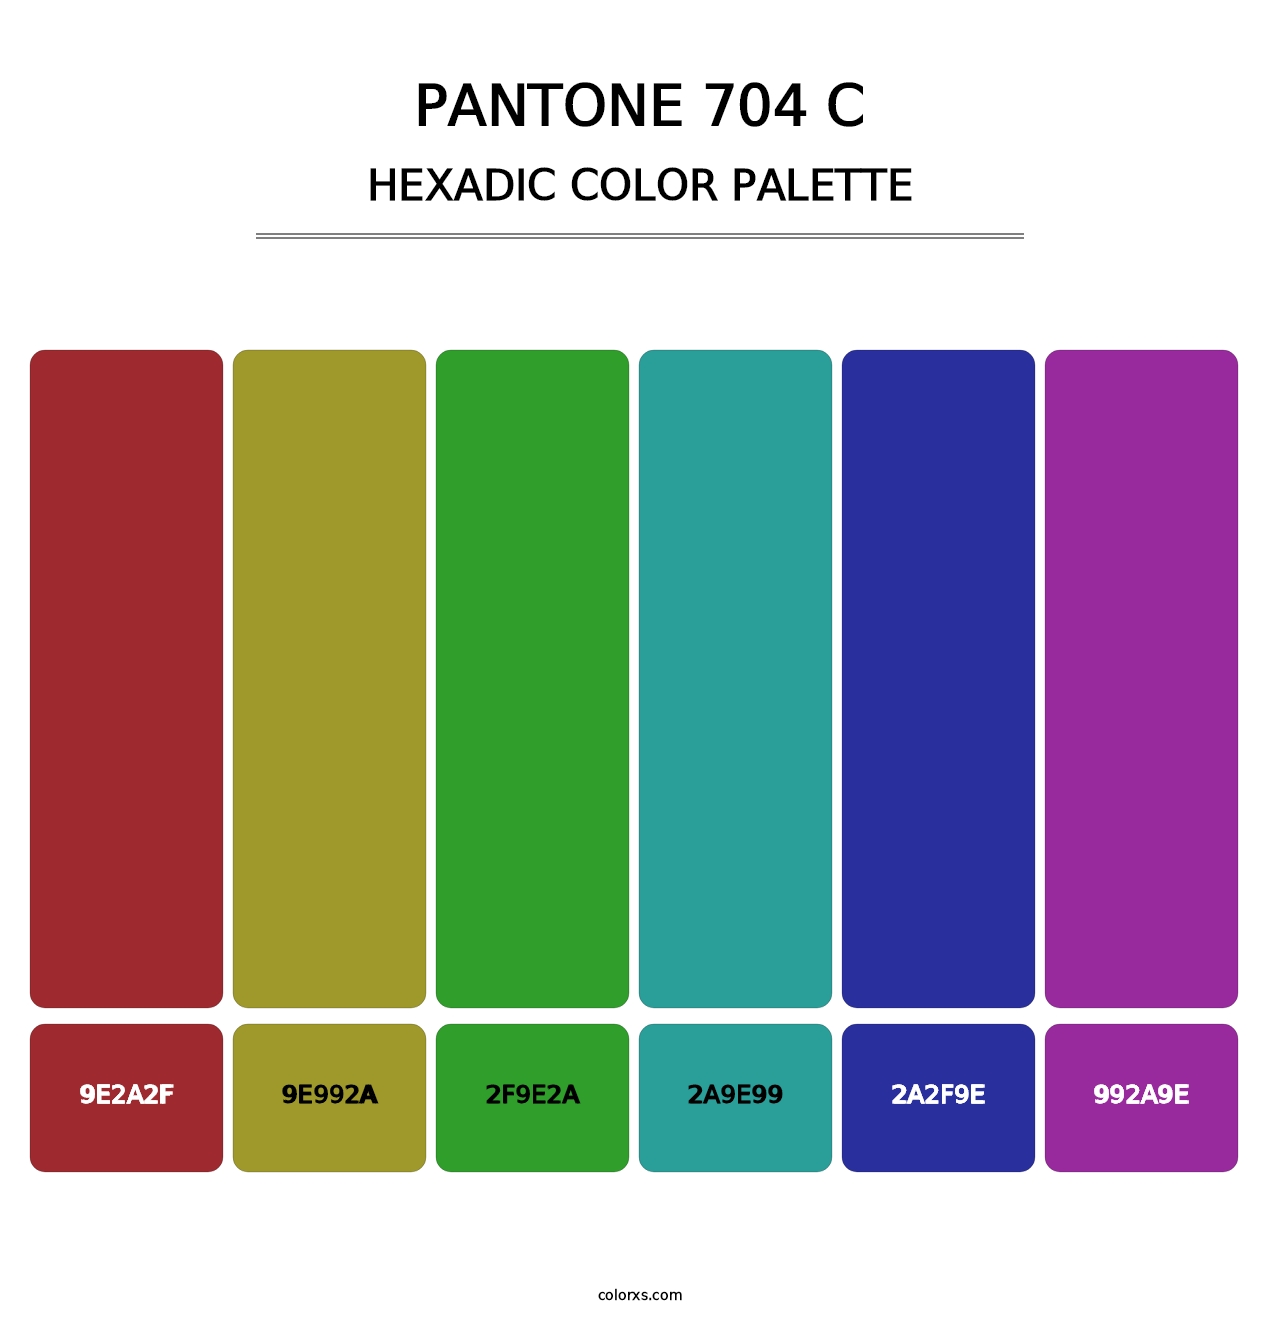 PANTONE 704 C - Hexadic Color Palette